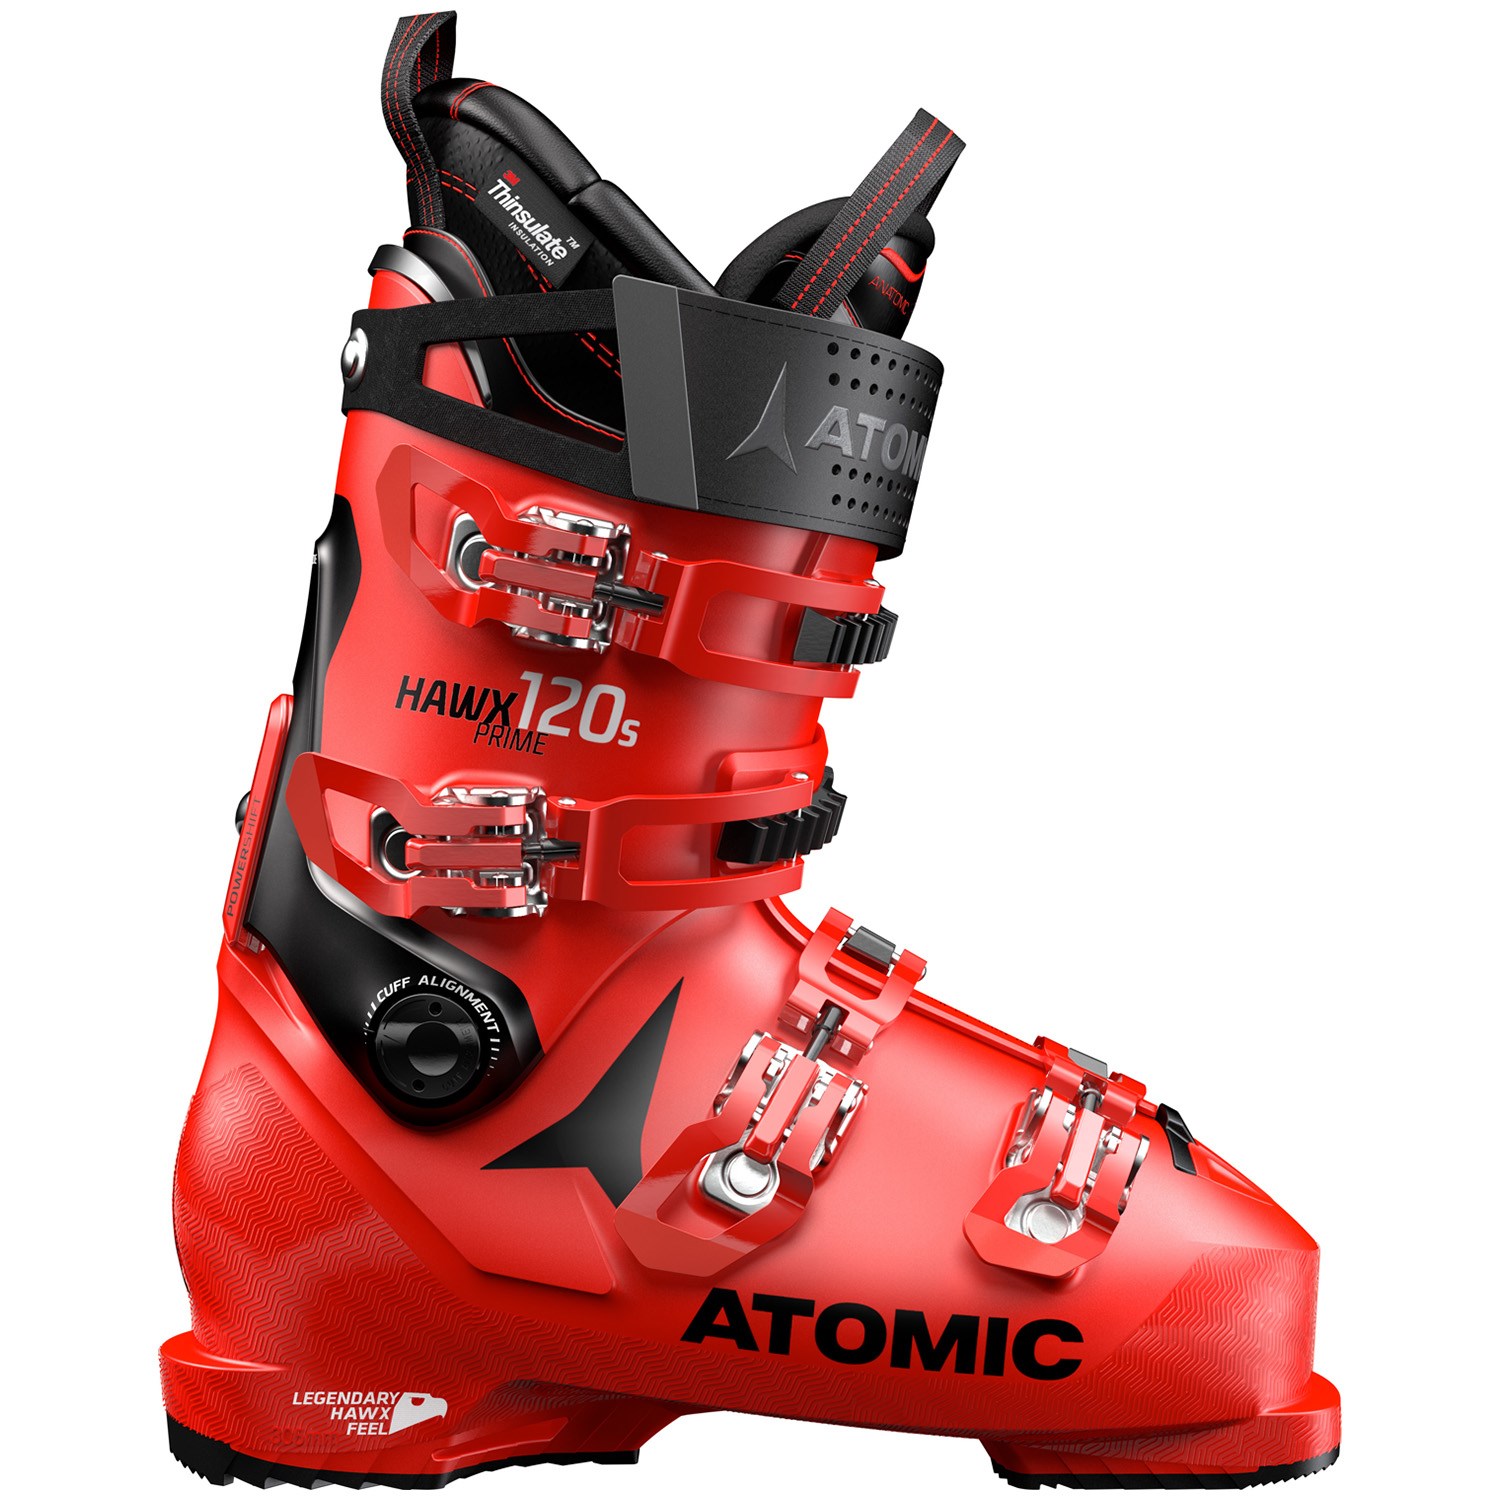 Atomic Hawx Prime 120 S Ski Boots 2019 | evo